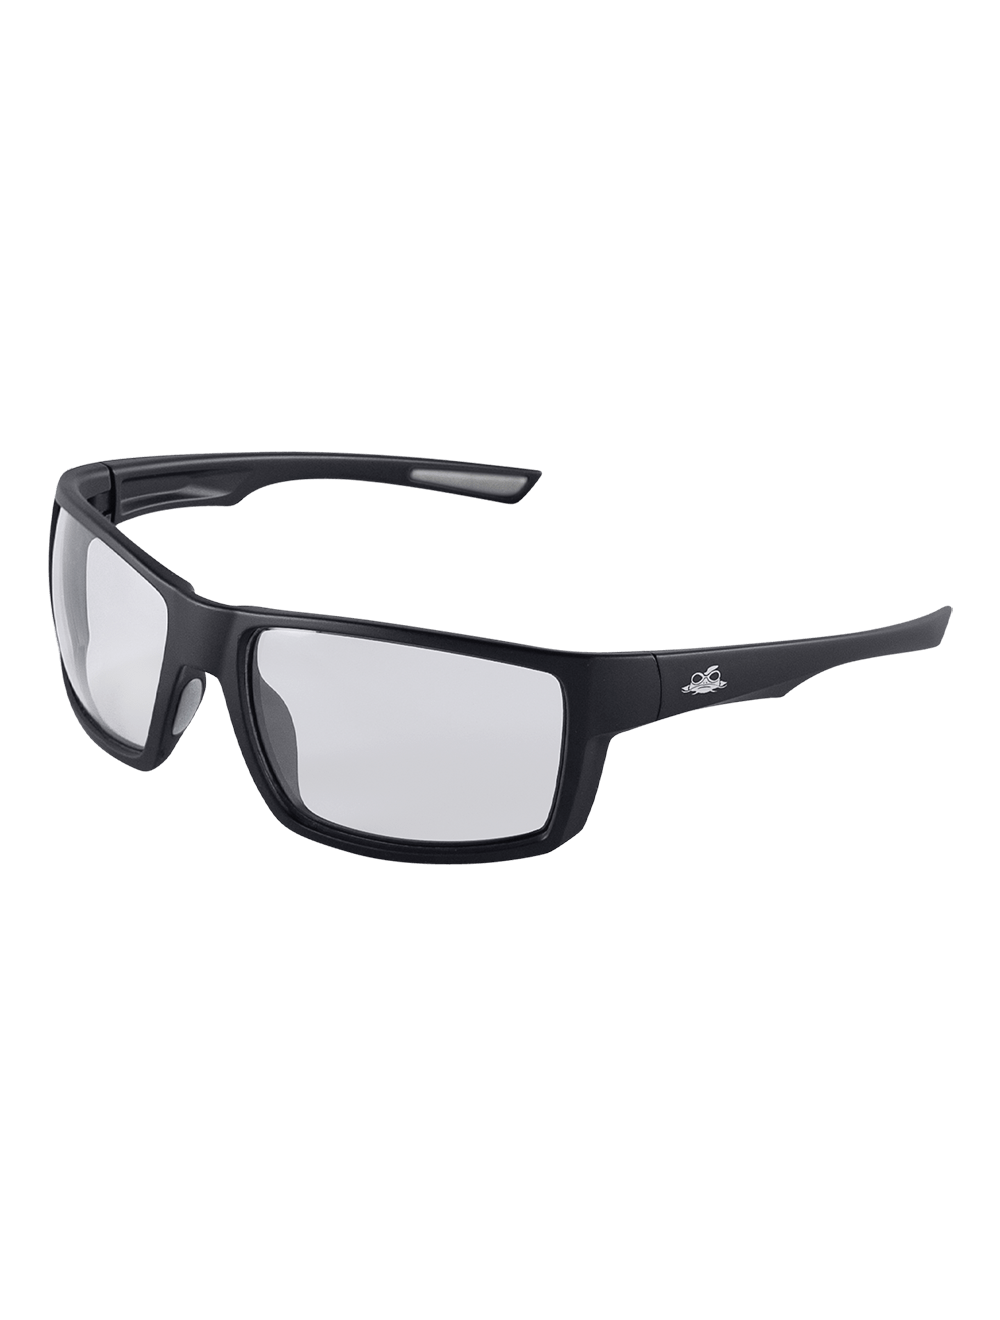 Sawfish™ Variable Tint Performance Fog Technology Lens, Matte Black Frame Safety  Glasses - BH26613PFT Bullhead Safety Eyewear, Cooling Safety, Heat Stress  Safety, Work at Height Safety, Hearing Safety